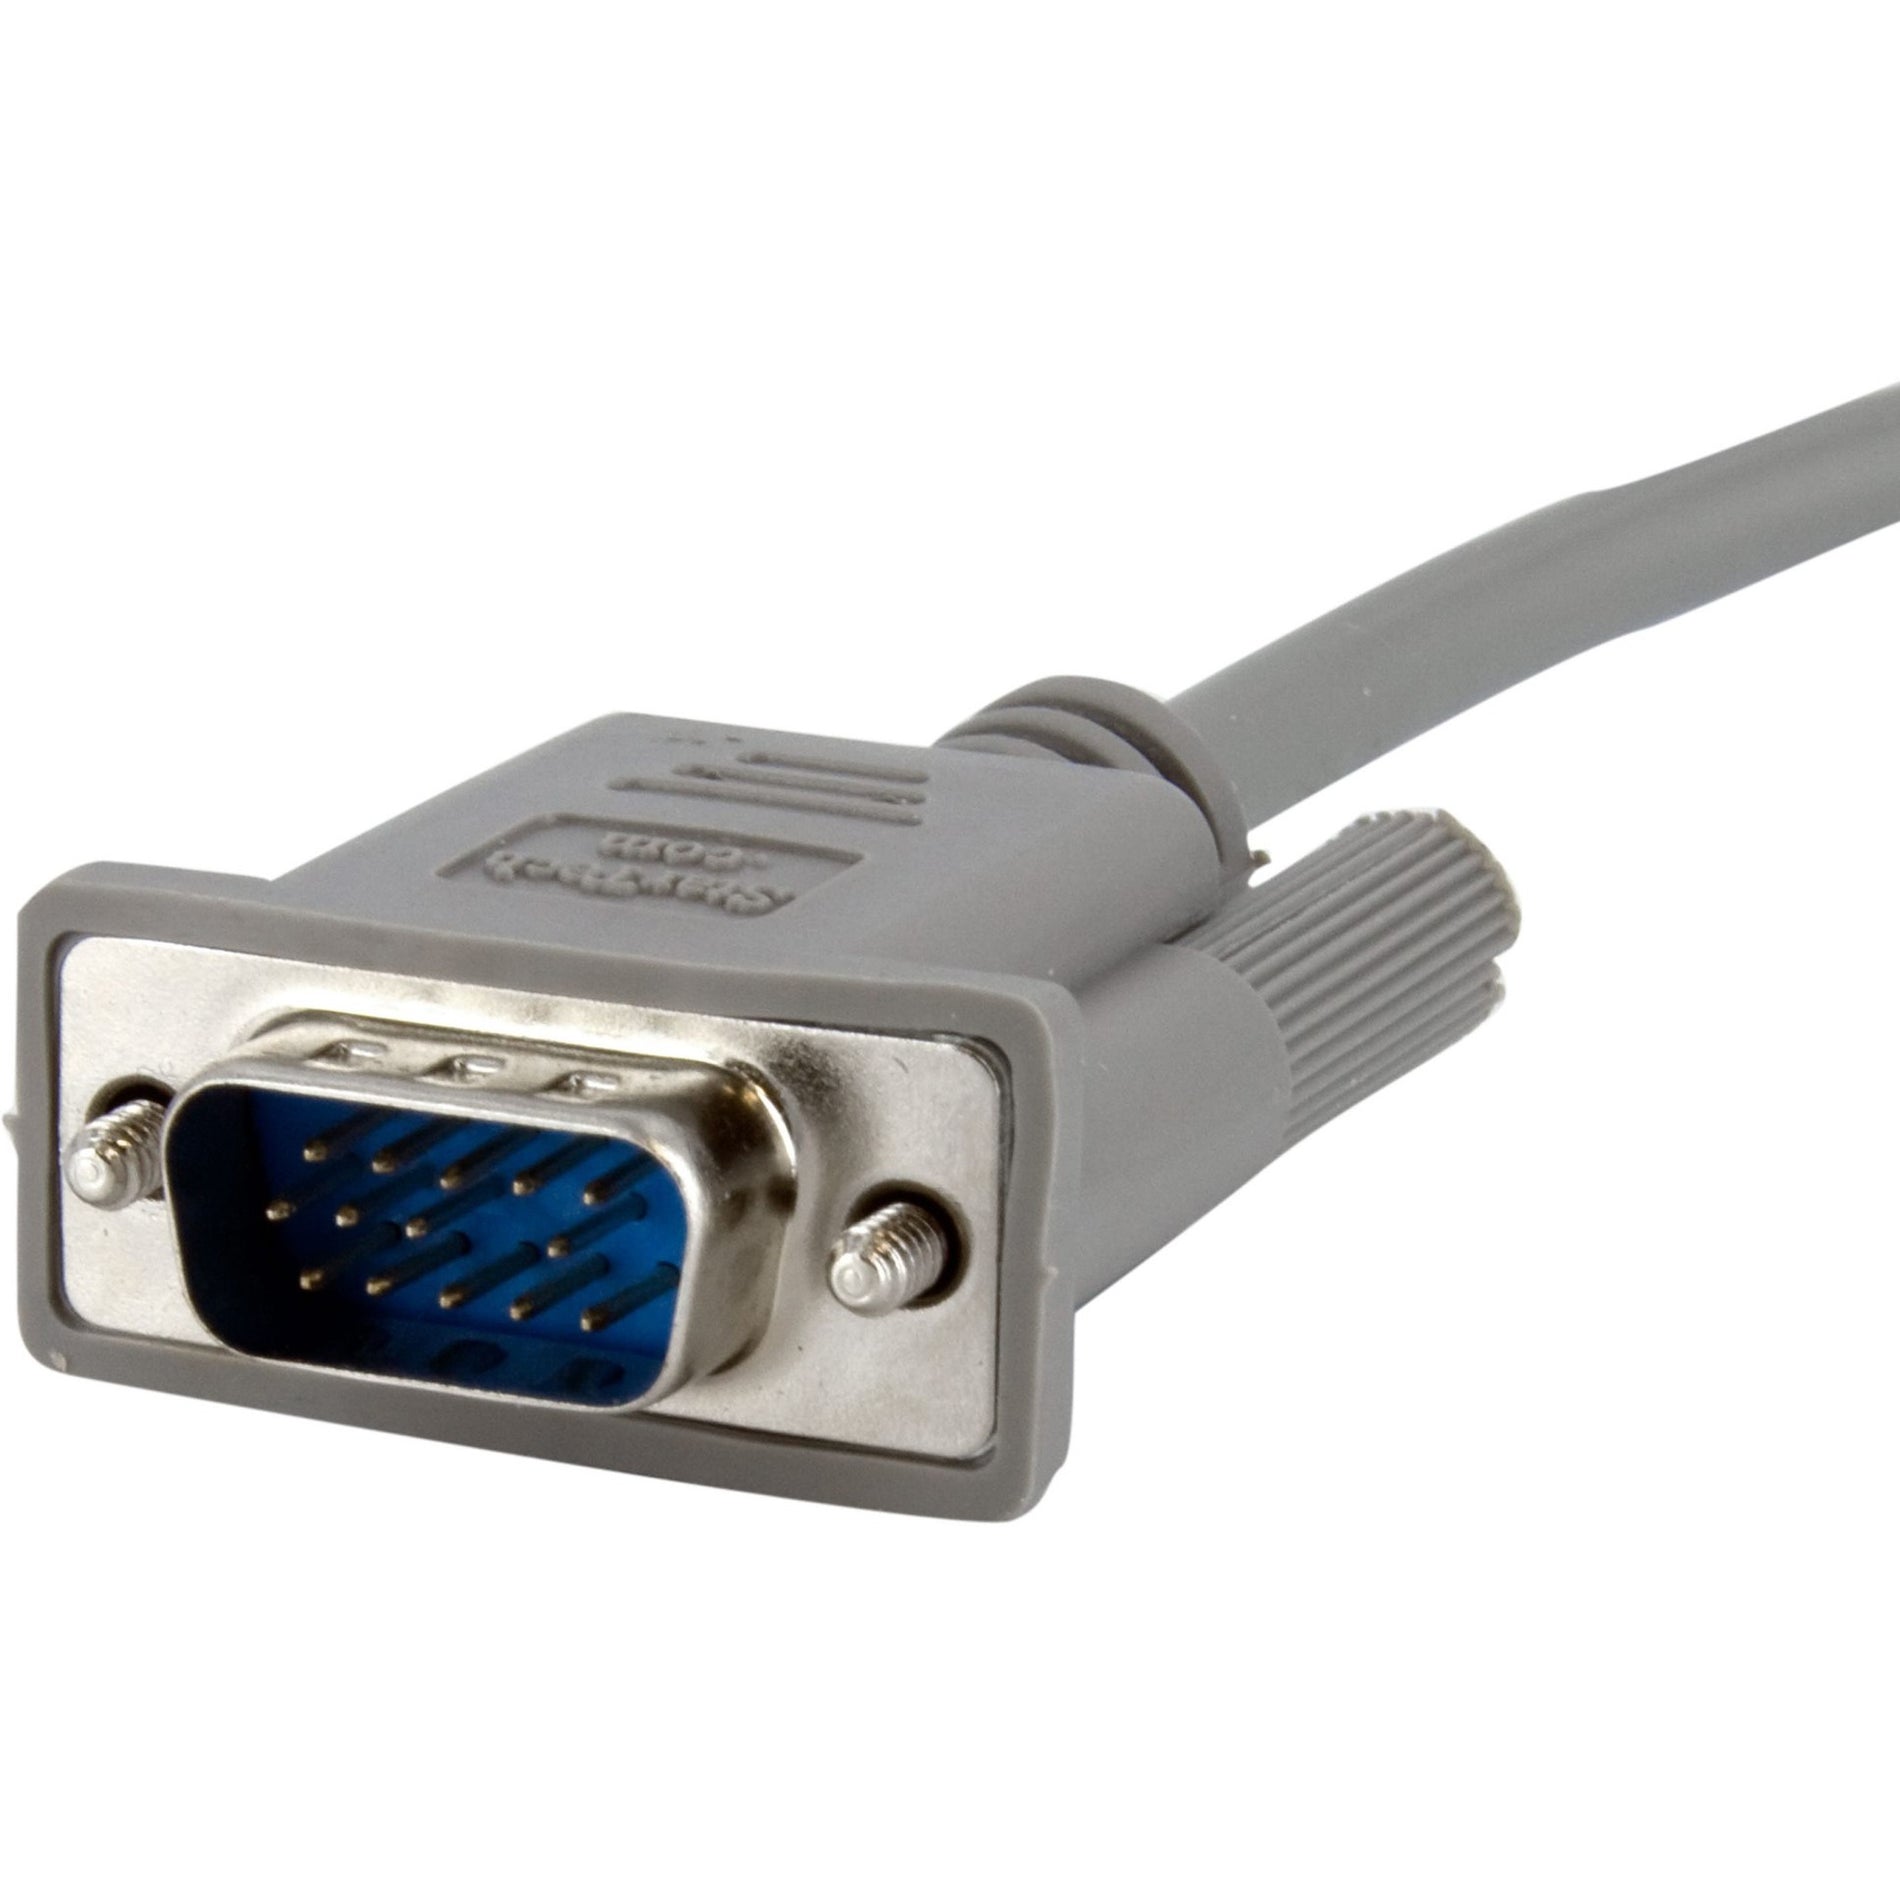 StarTech.com MXT101MM10 VGA Video Monitor Cable - 10 ft HD-15 Male to HD-15 Male Copper Conductor Gray